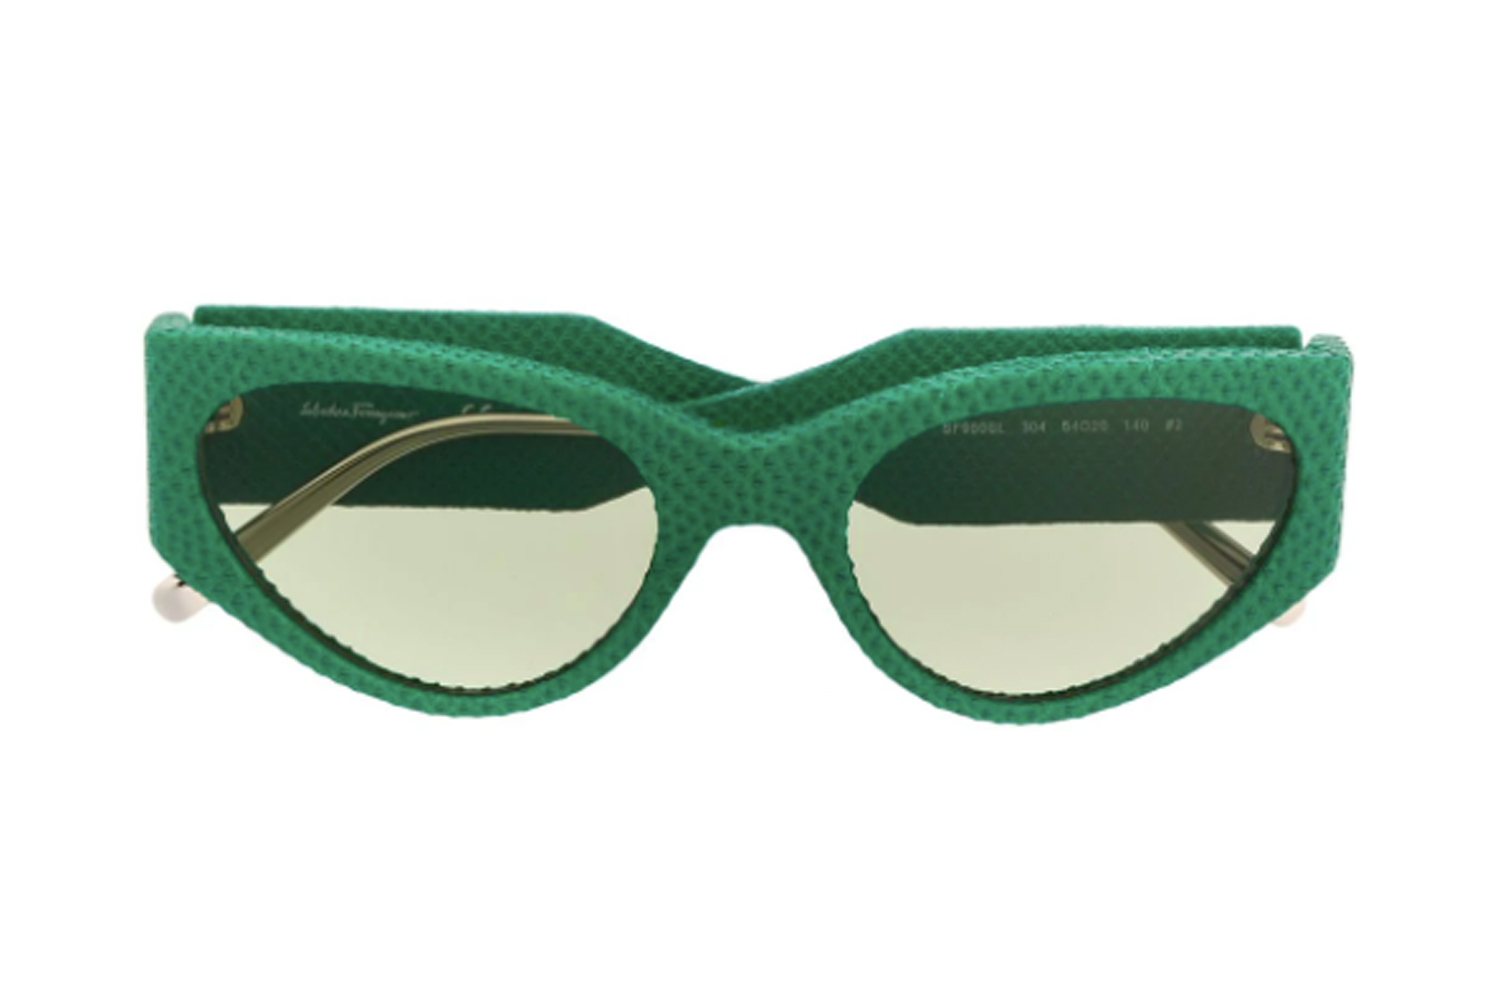 Salvatore Ferragamo oval frame sunglasses $877